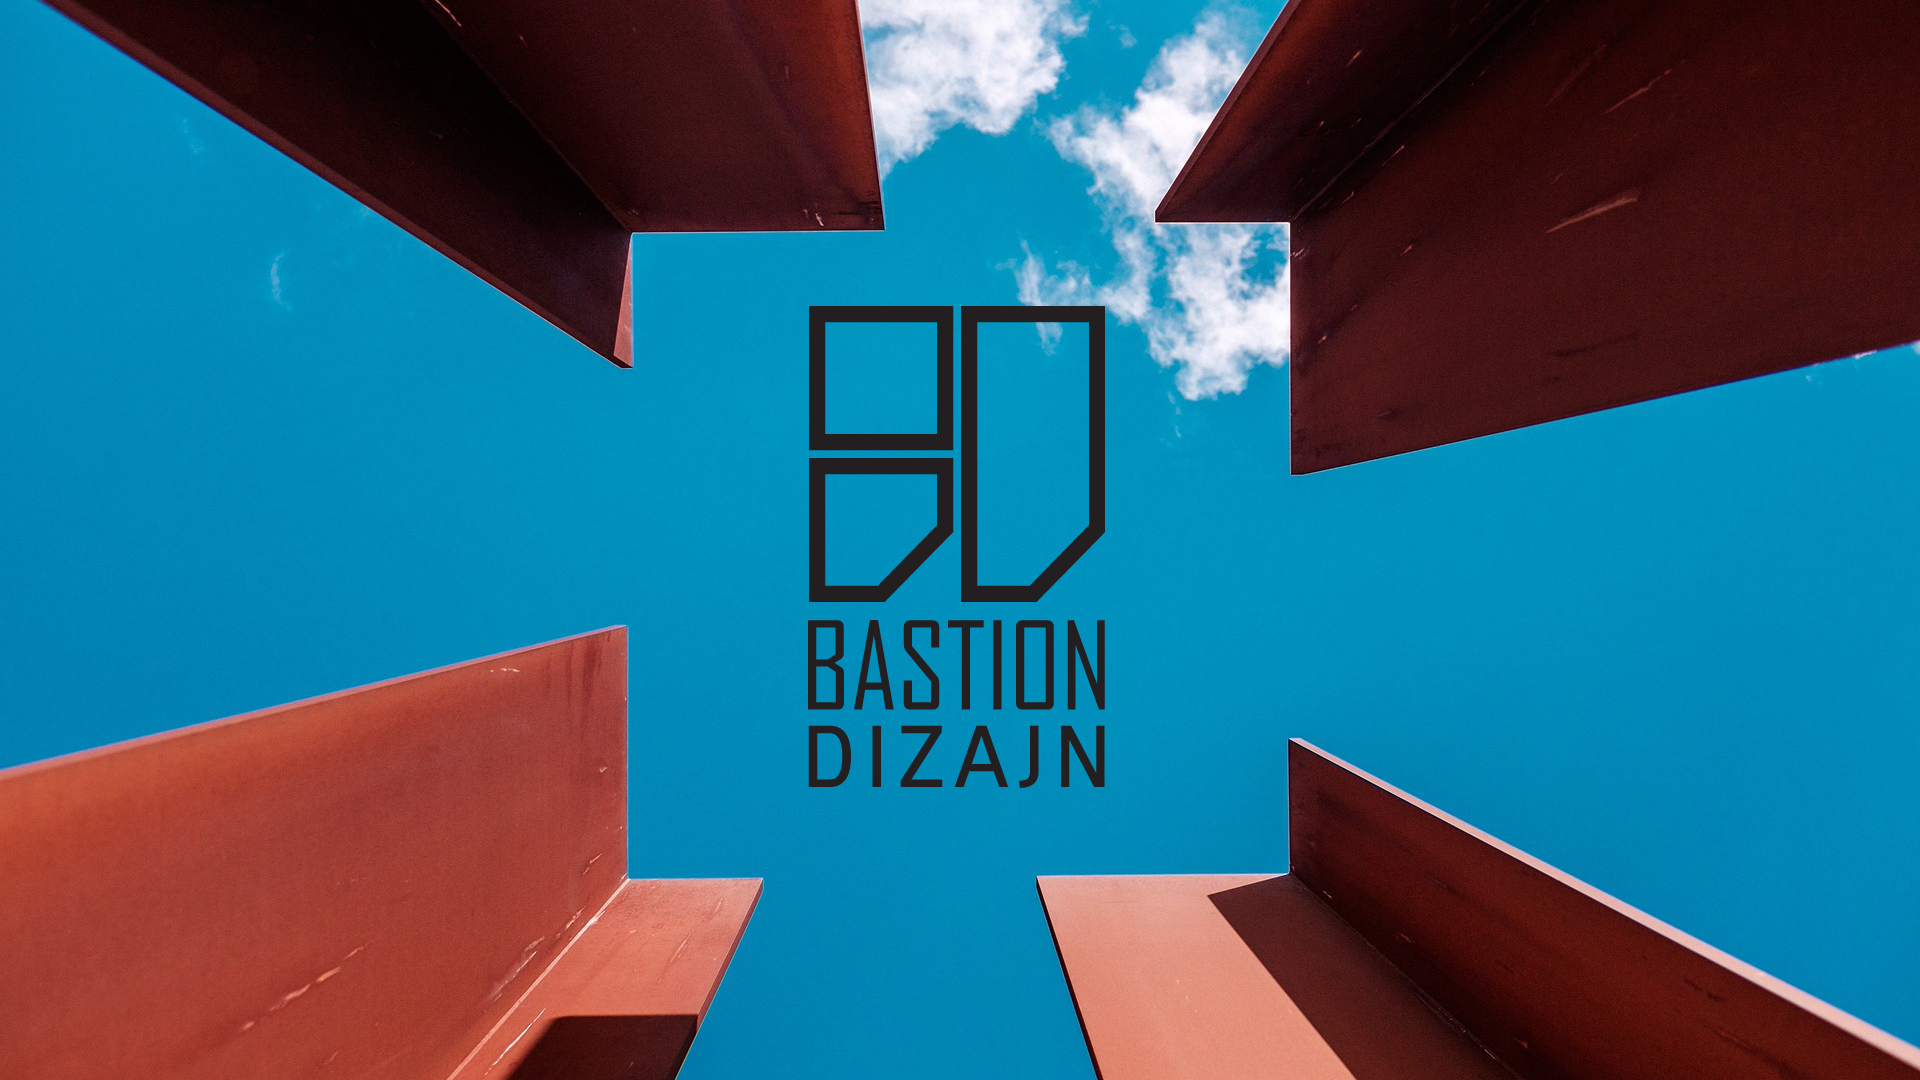 Bastion Dizajn logo